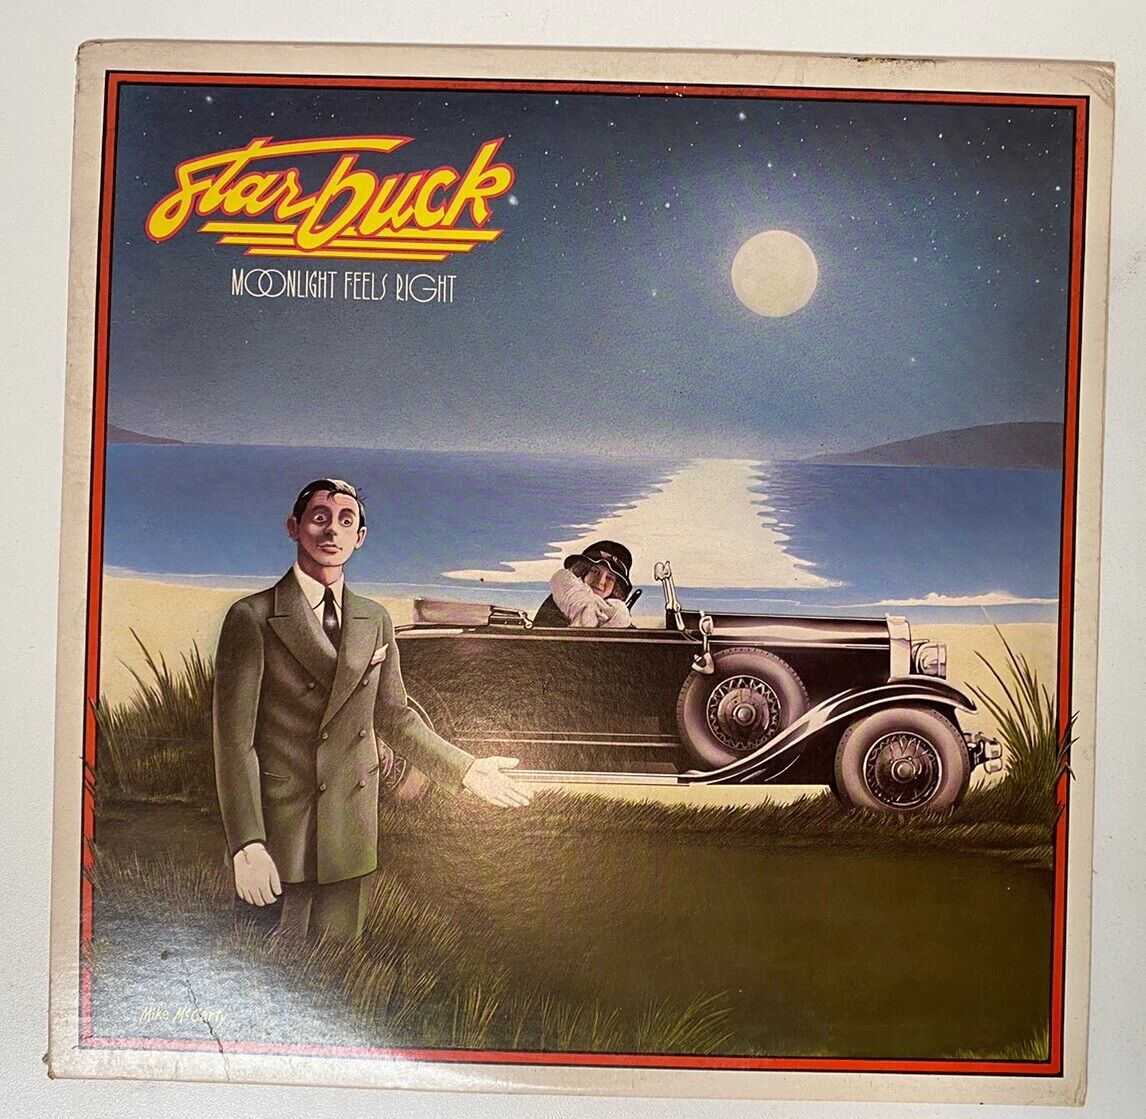 Starbuck - “Moonlight Feels Right” 1976 Private Stock PS2013 Stereo Vinyl LP VG+